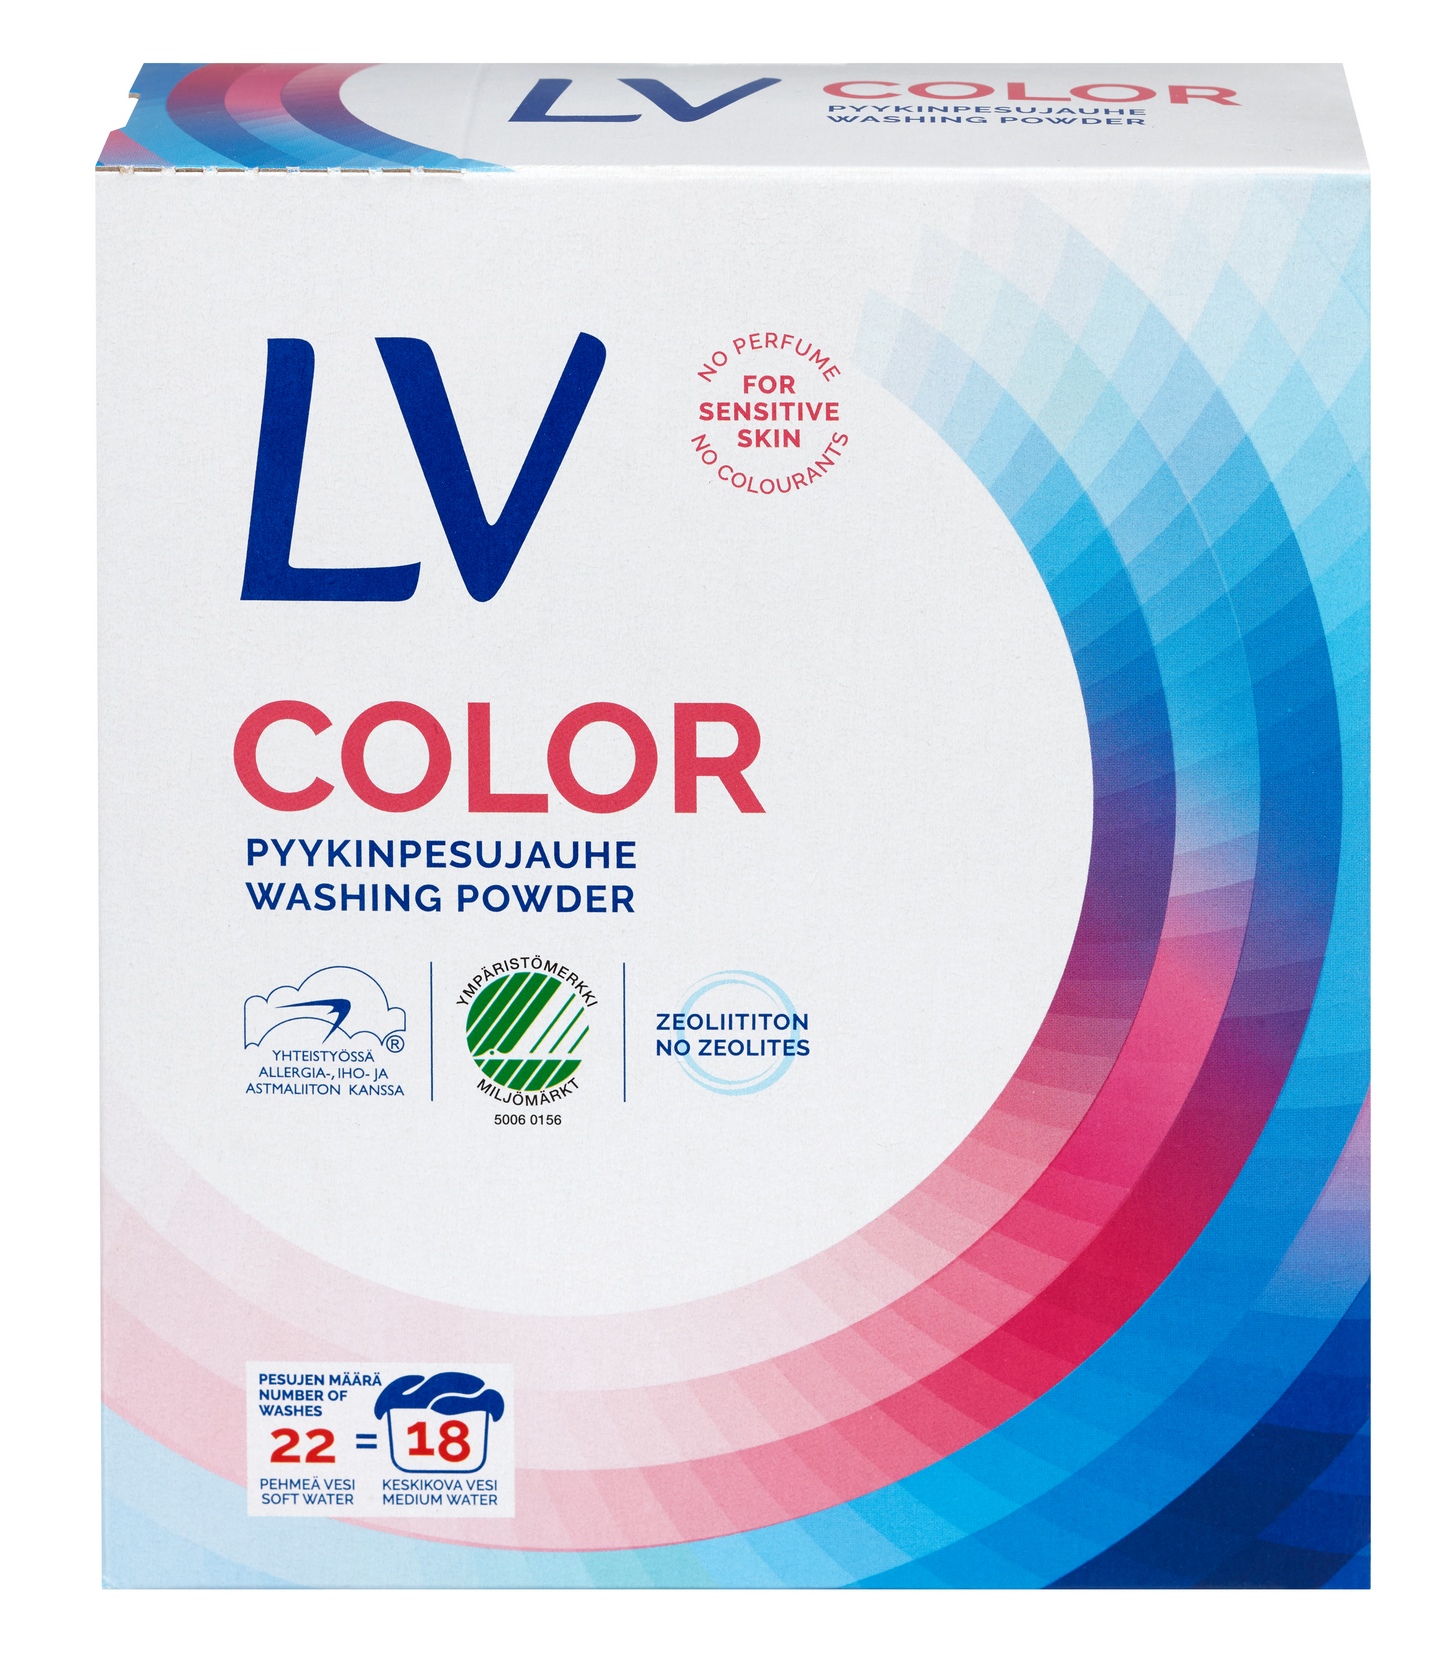 LV pyykinpesujauhetiiviste 750g Color